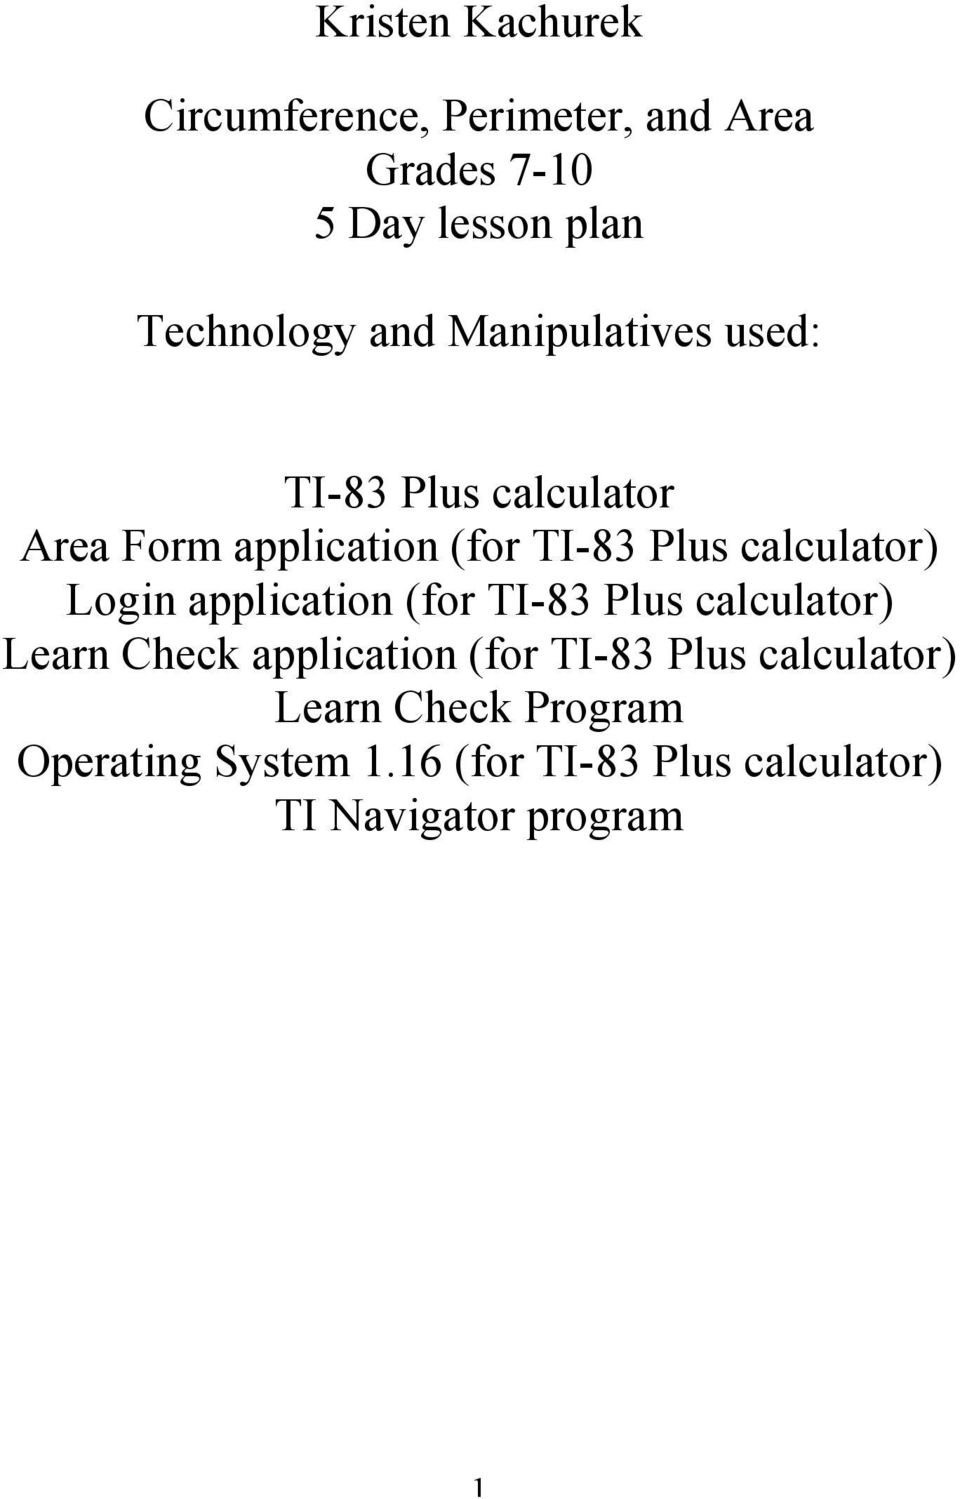 calculator) Login application (for TI-83 Plus calculator) Learn Check application (for TI-83